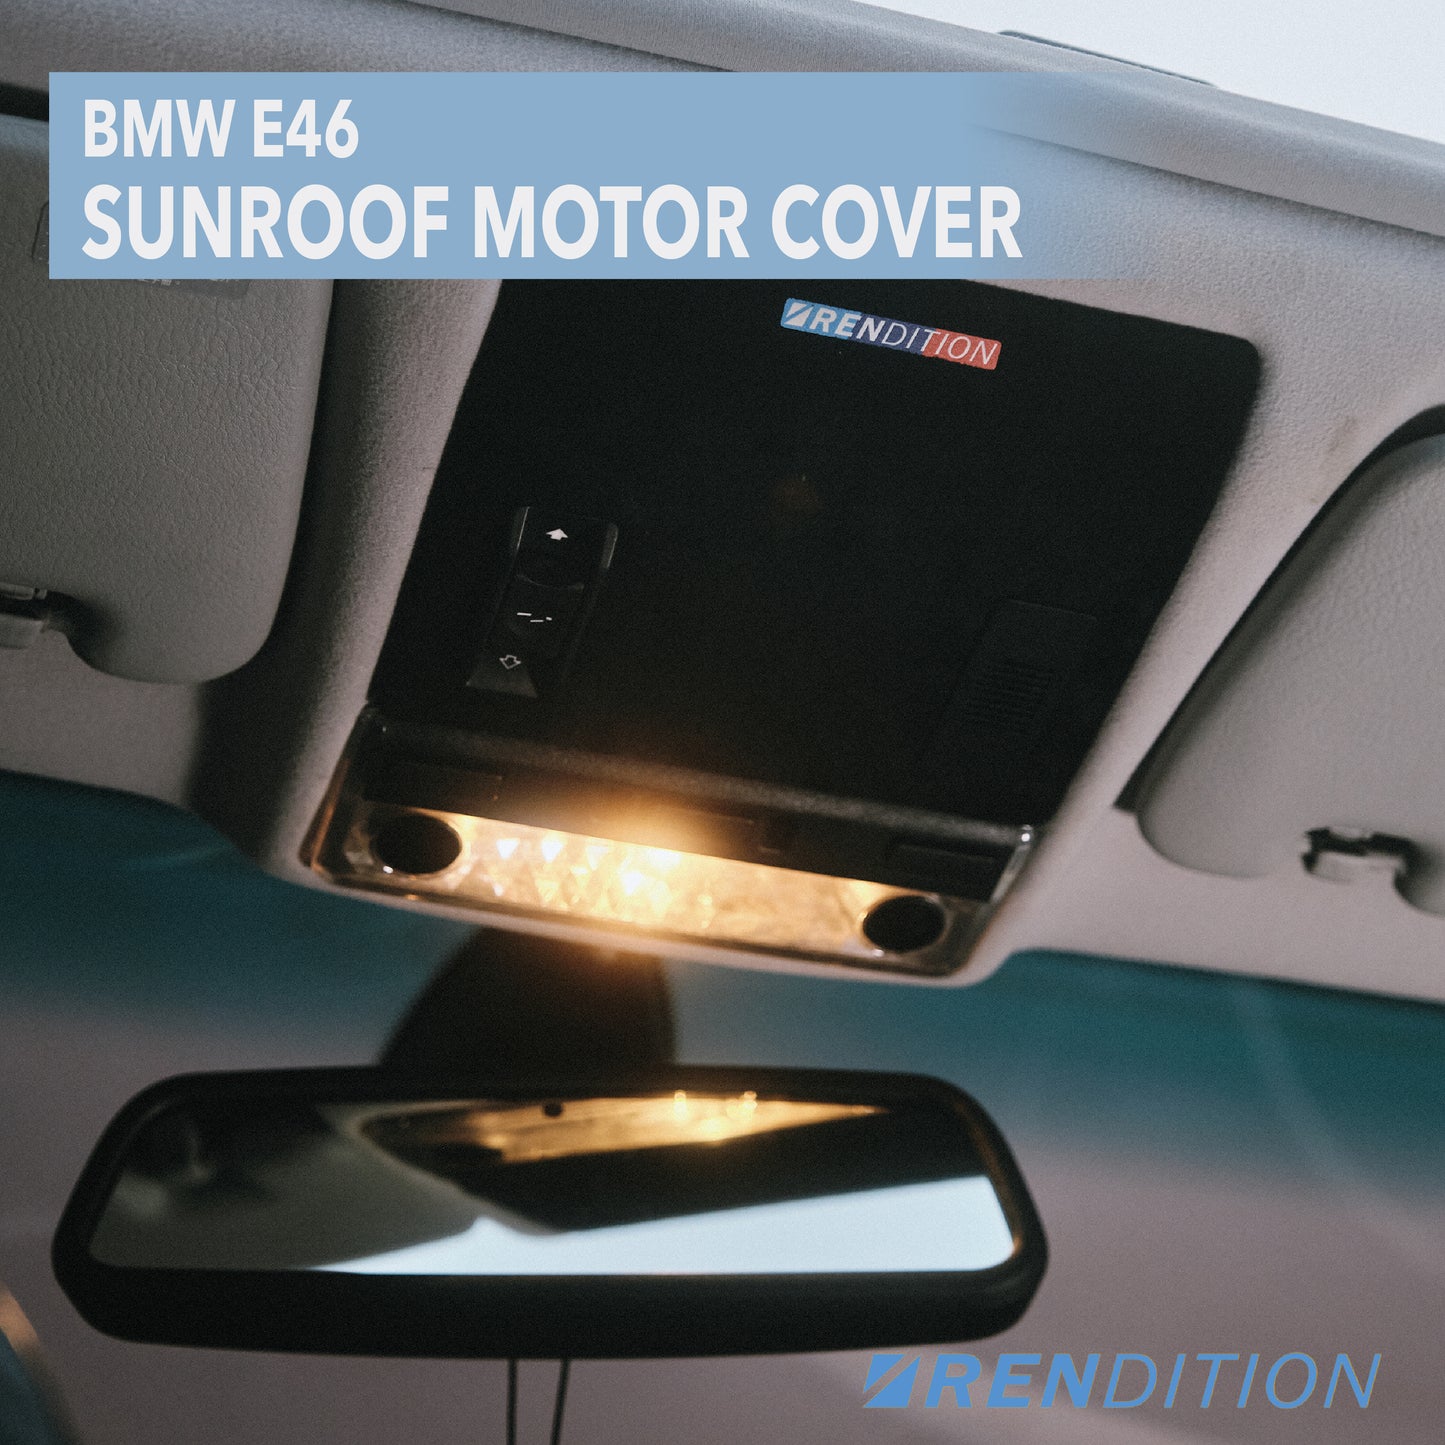 BMW E46 SUNROOF MOTOR COVER